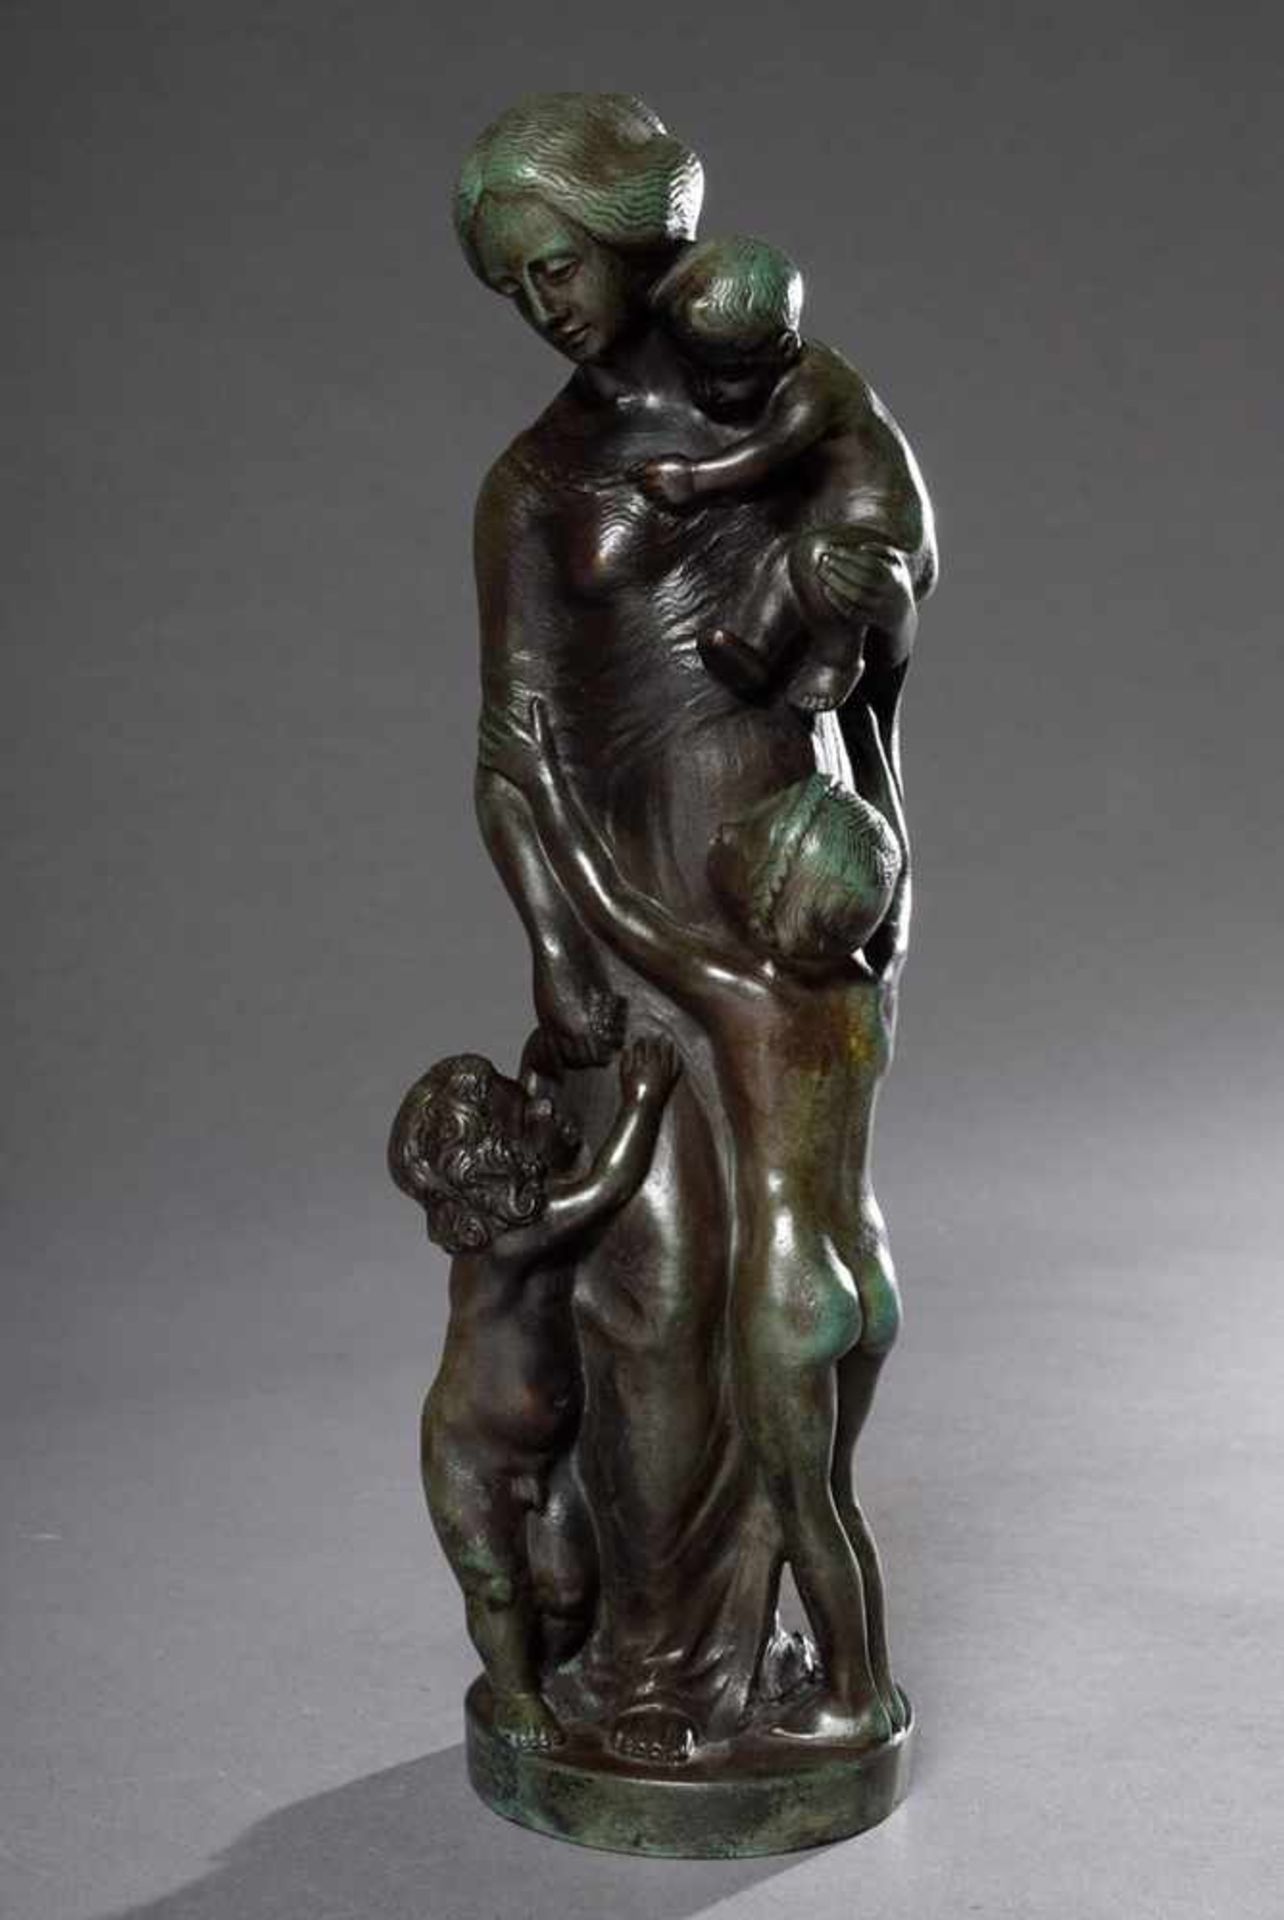 Schönauer, Alexander (1871-1955) "Mutterschaft", seltene Bronzeplastik des Hamburger Silberschmieds,